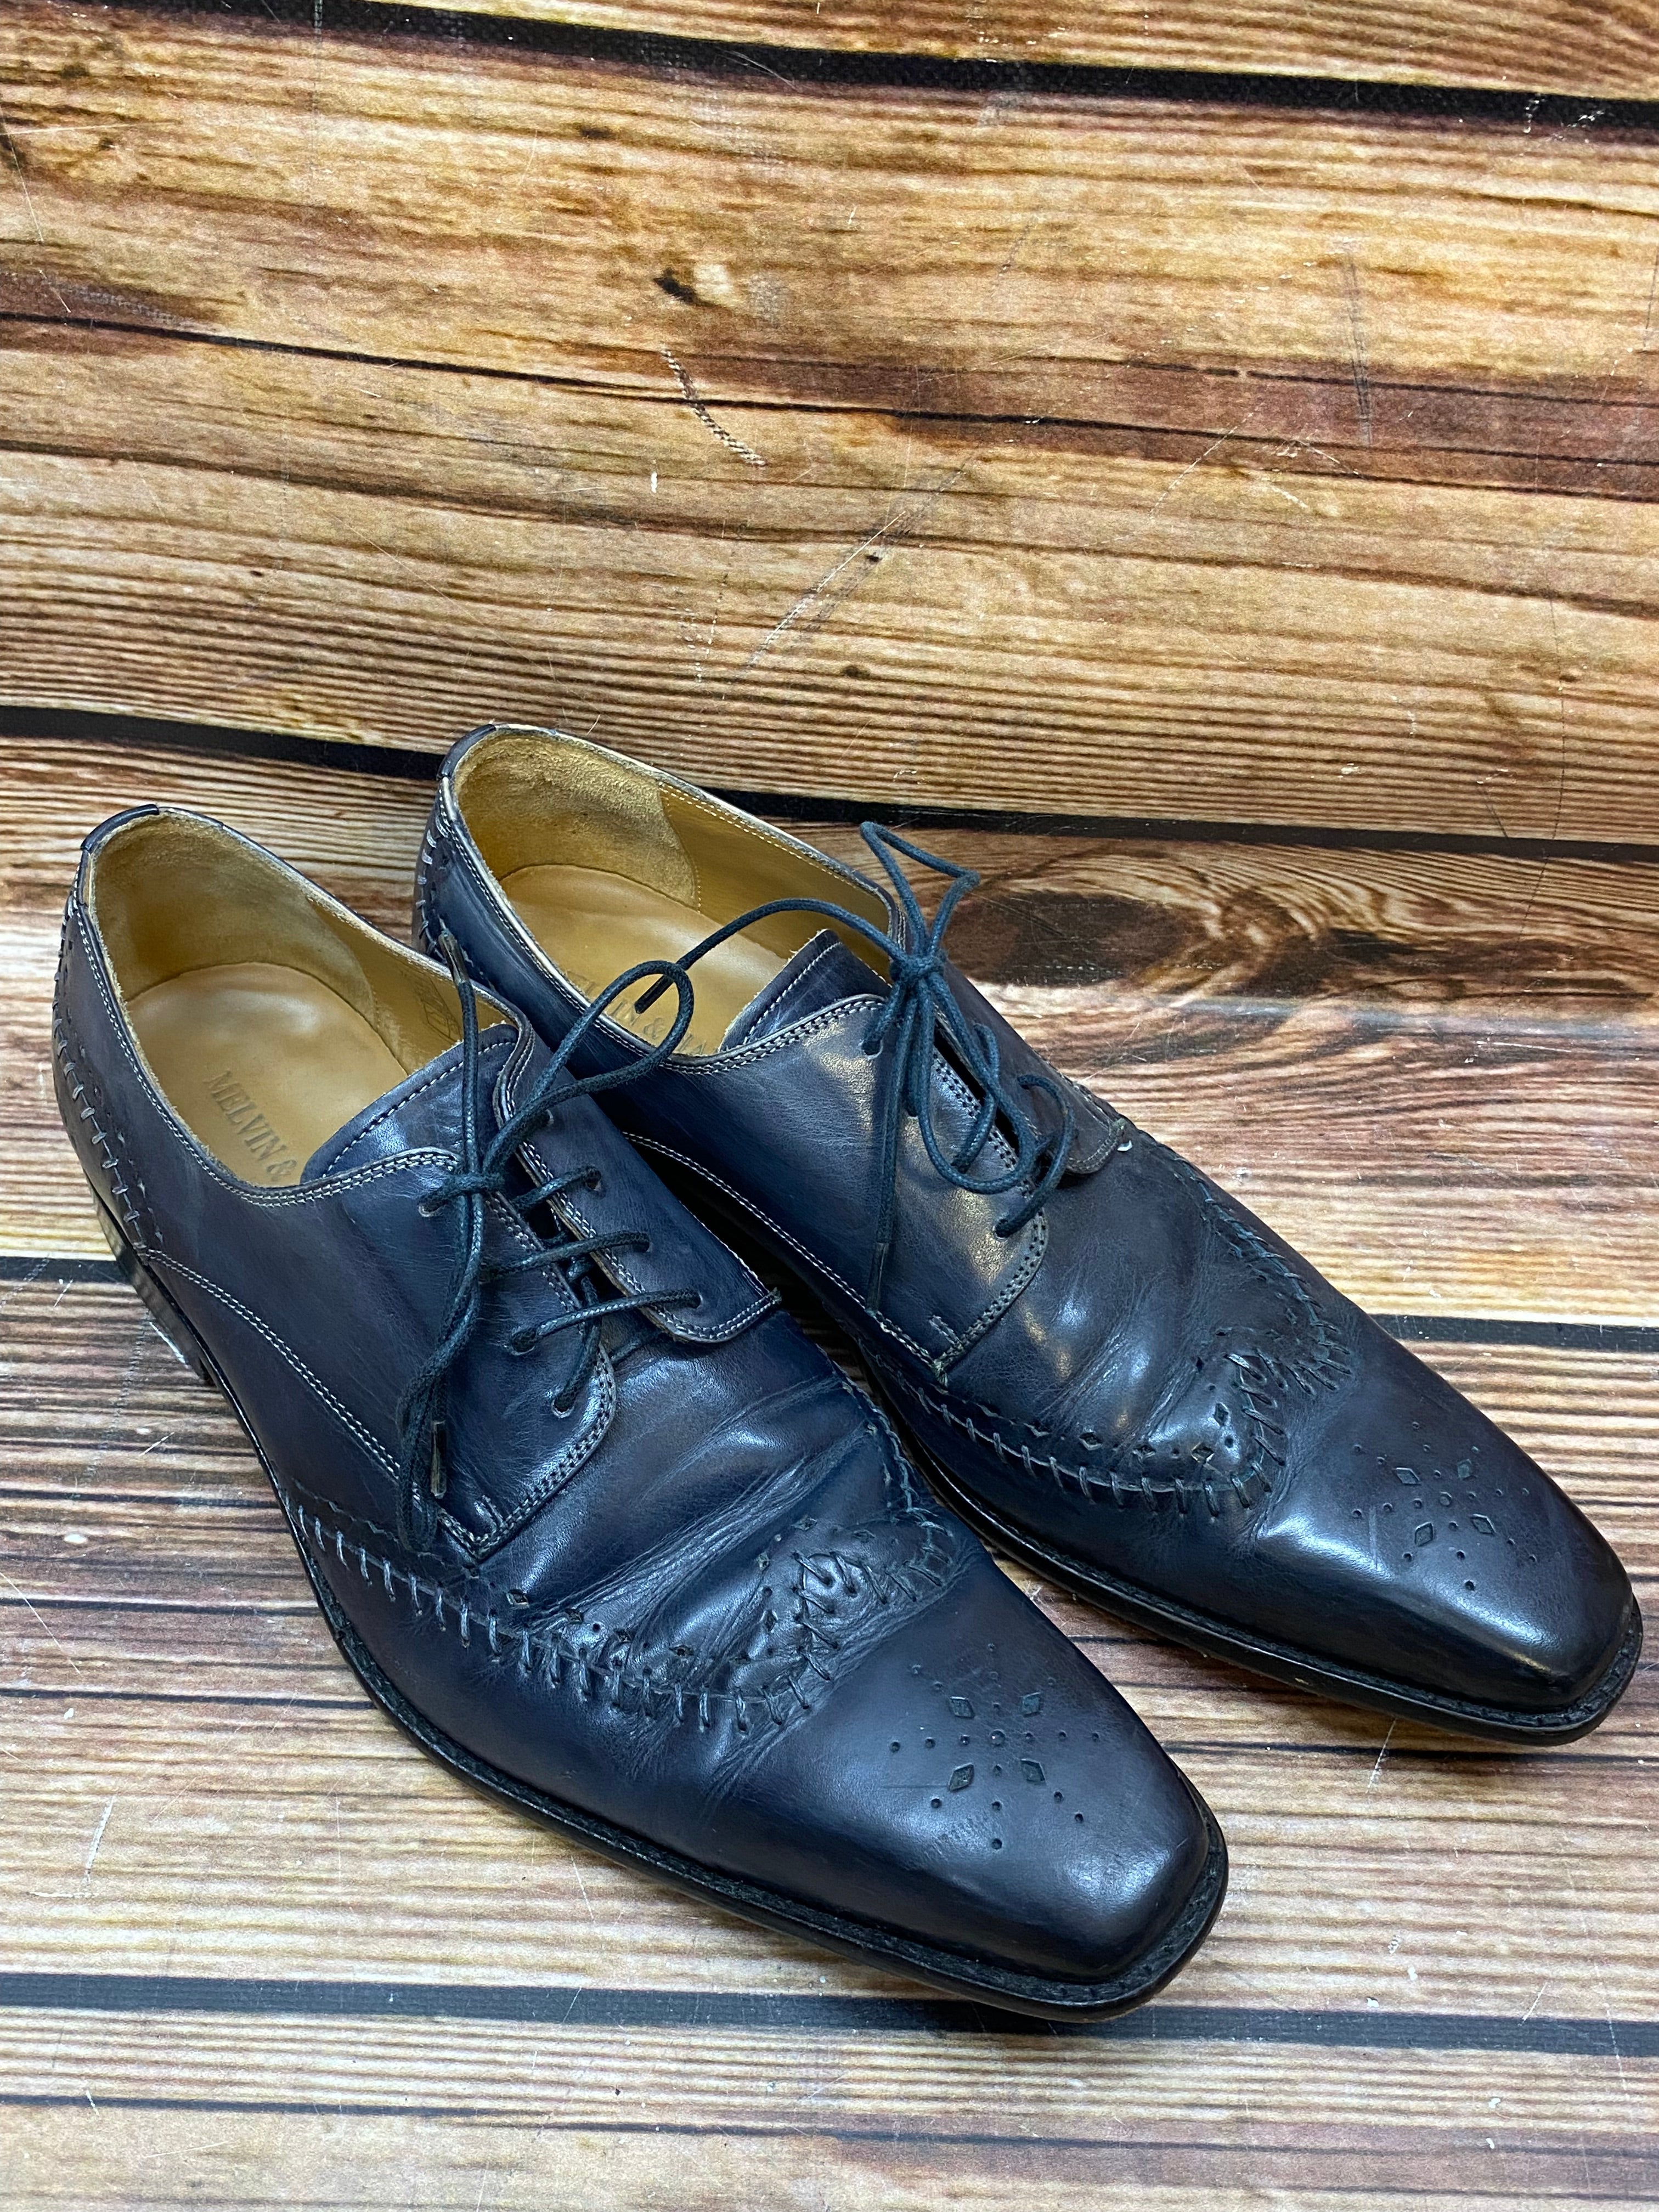 Melvin & Hamilton Vintage Schuhe Herren Gr.44 dunkelblauMelvin & Hamilton Vintage Schuhe Herren Gr.44 dunkelblau